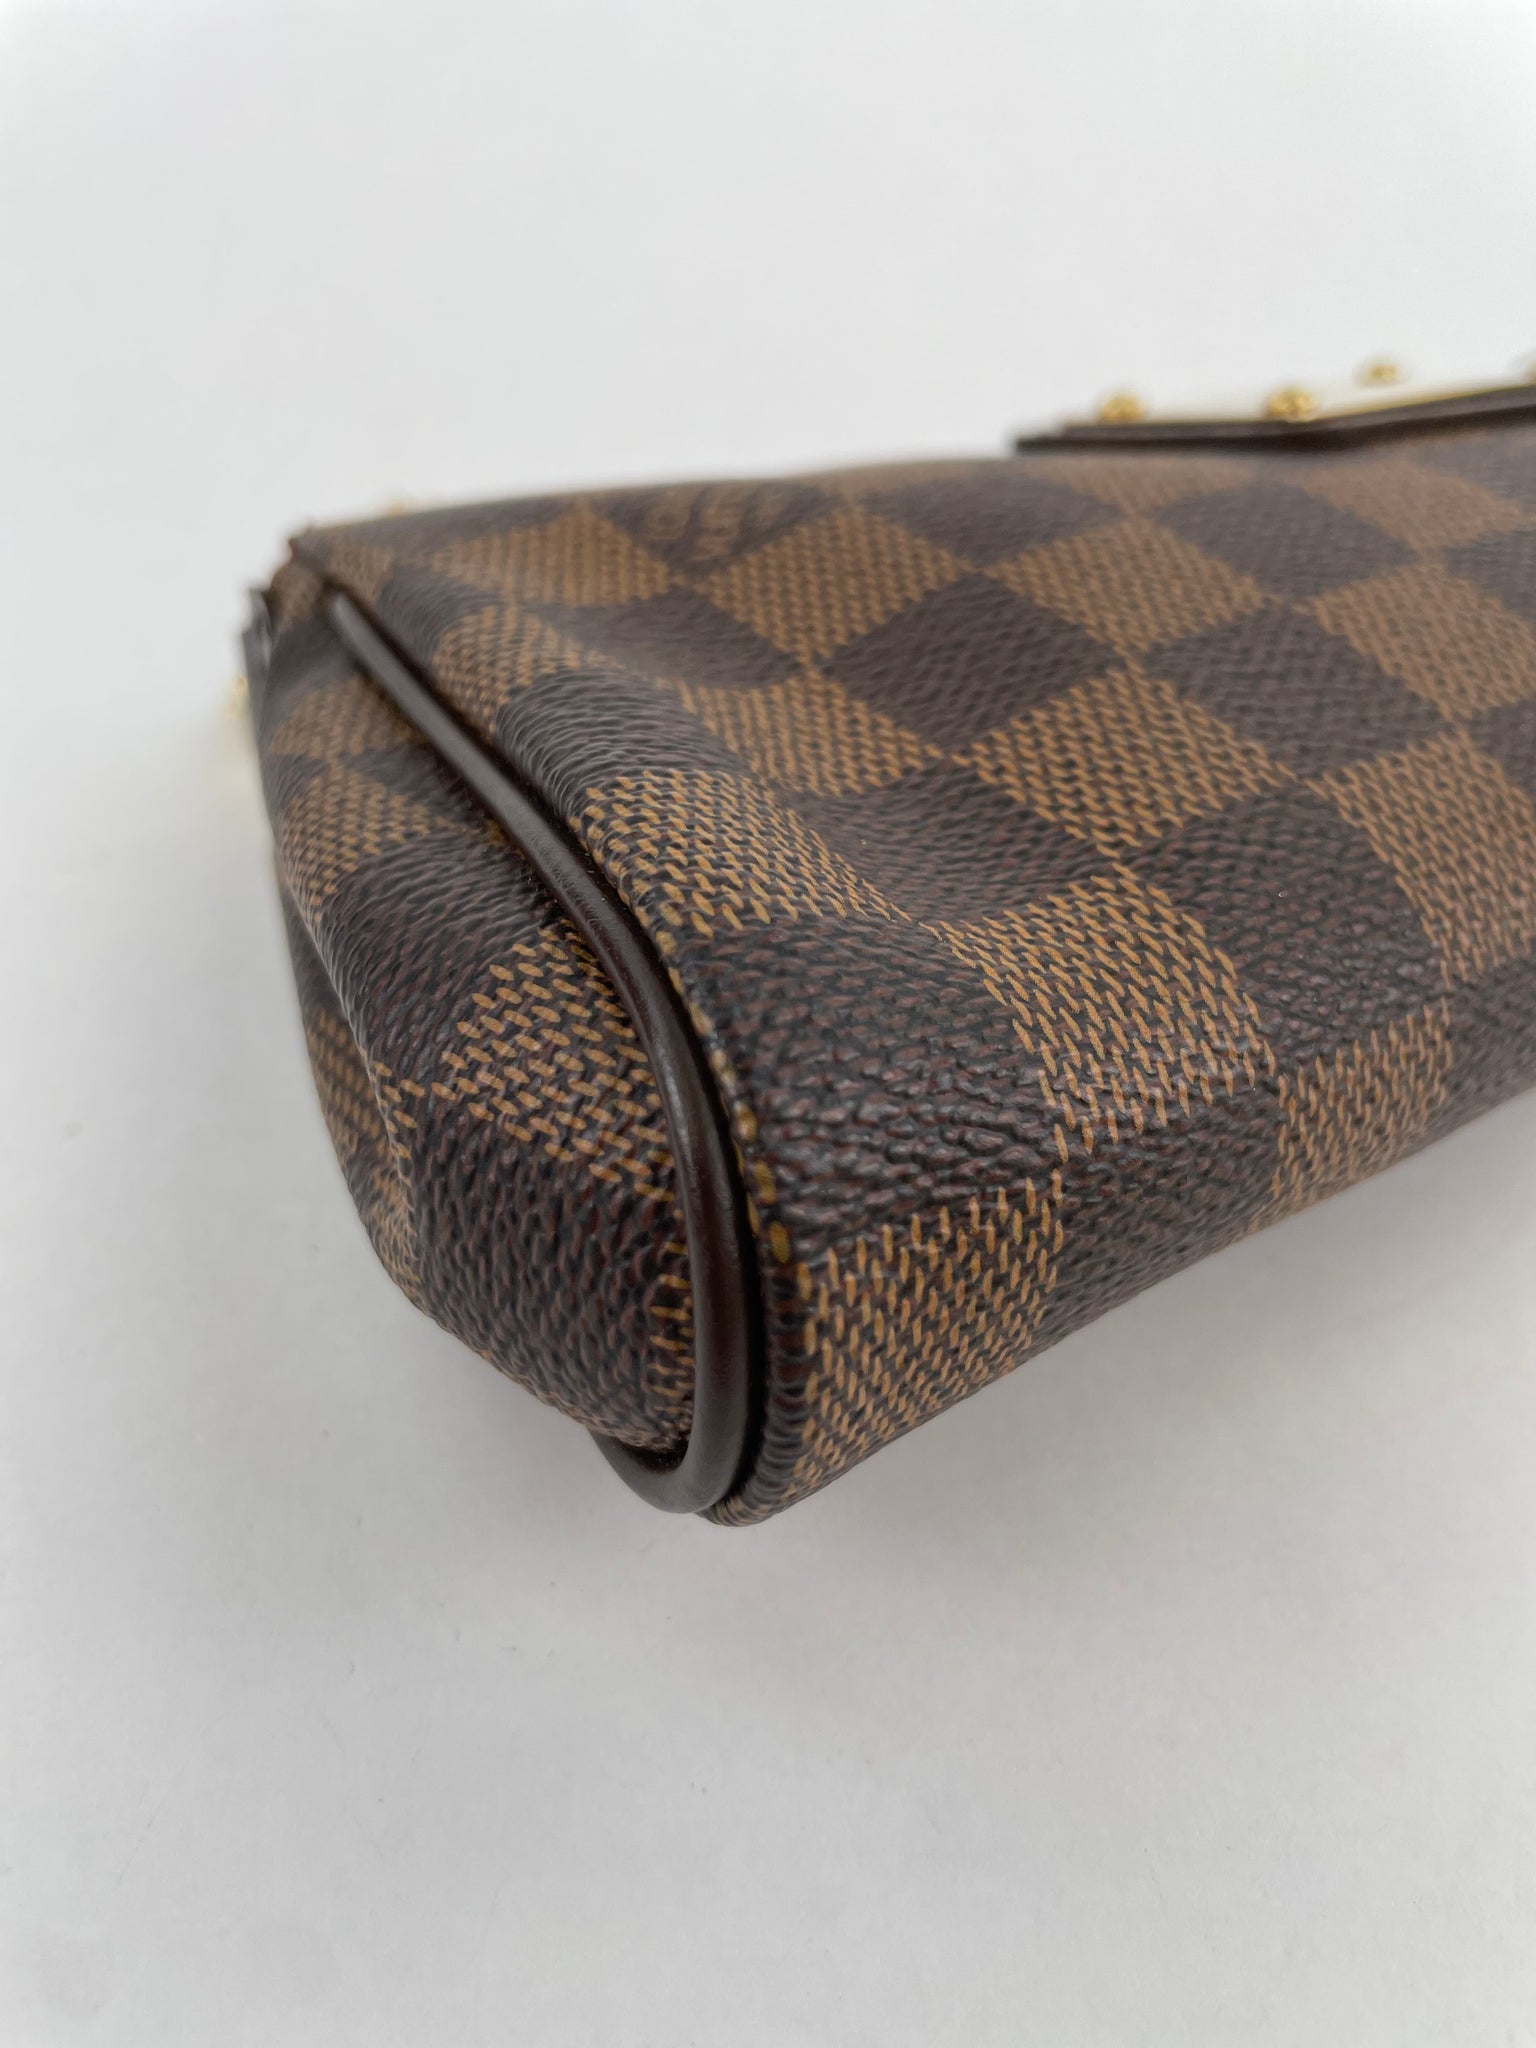 Preowned Authentic Louis Vuitton Eva Shoulder Bag Convertible to Crossbody Bag